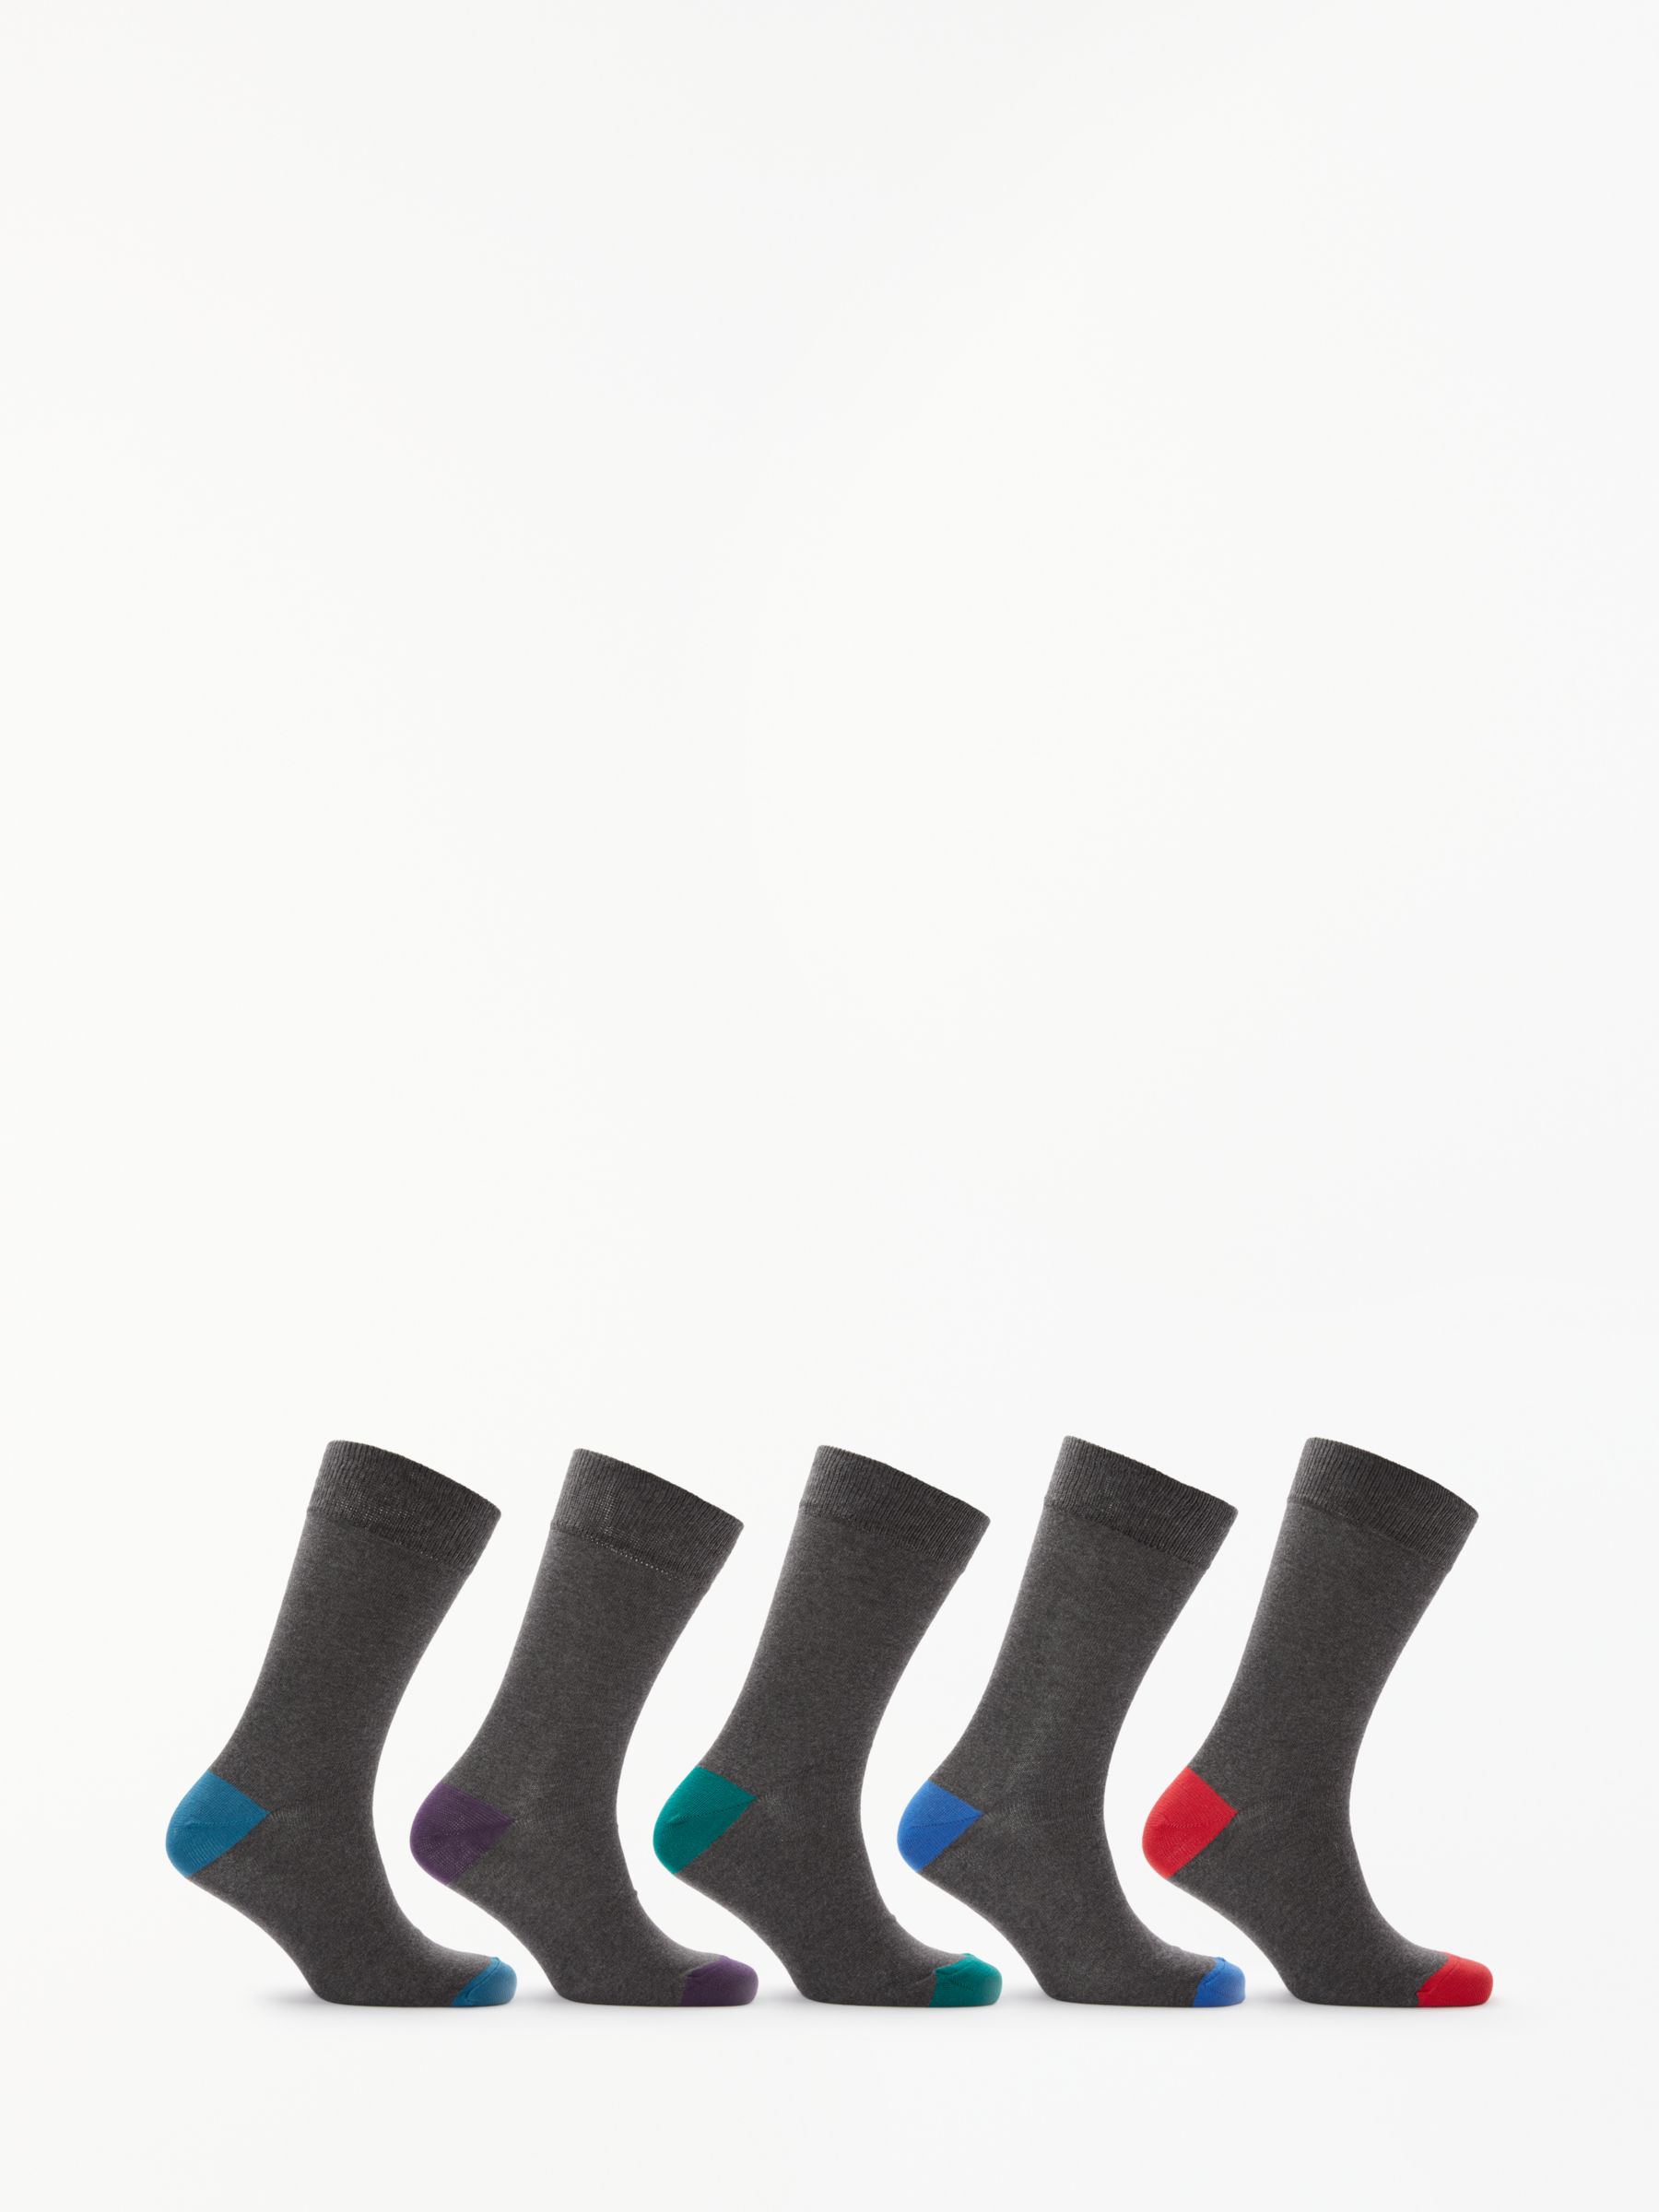 John Lewis & Partners Fashion Heel and Toe Socks, Pack of 5, Multi